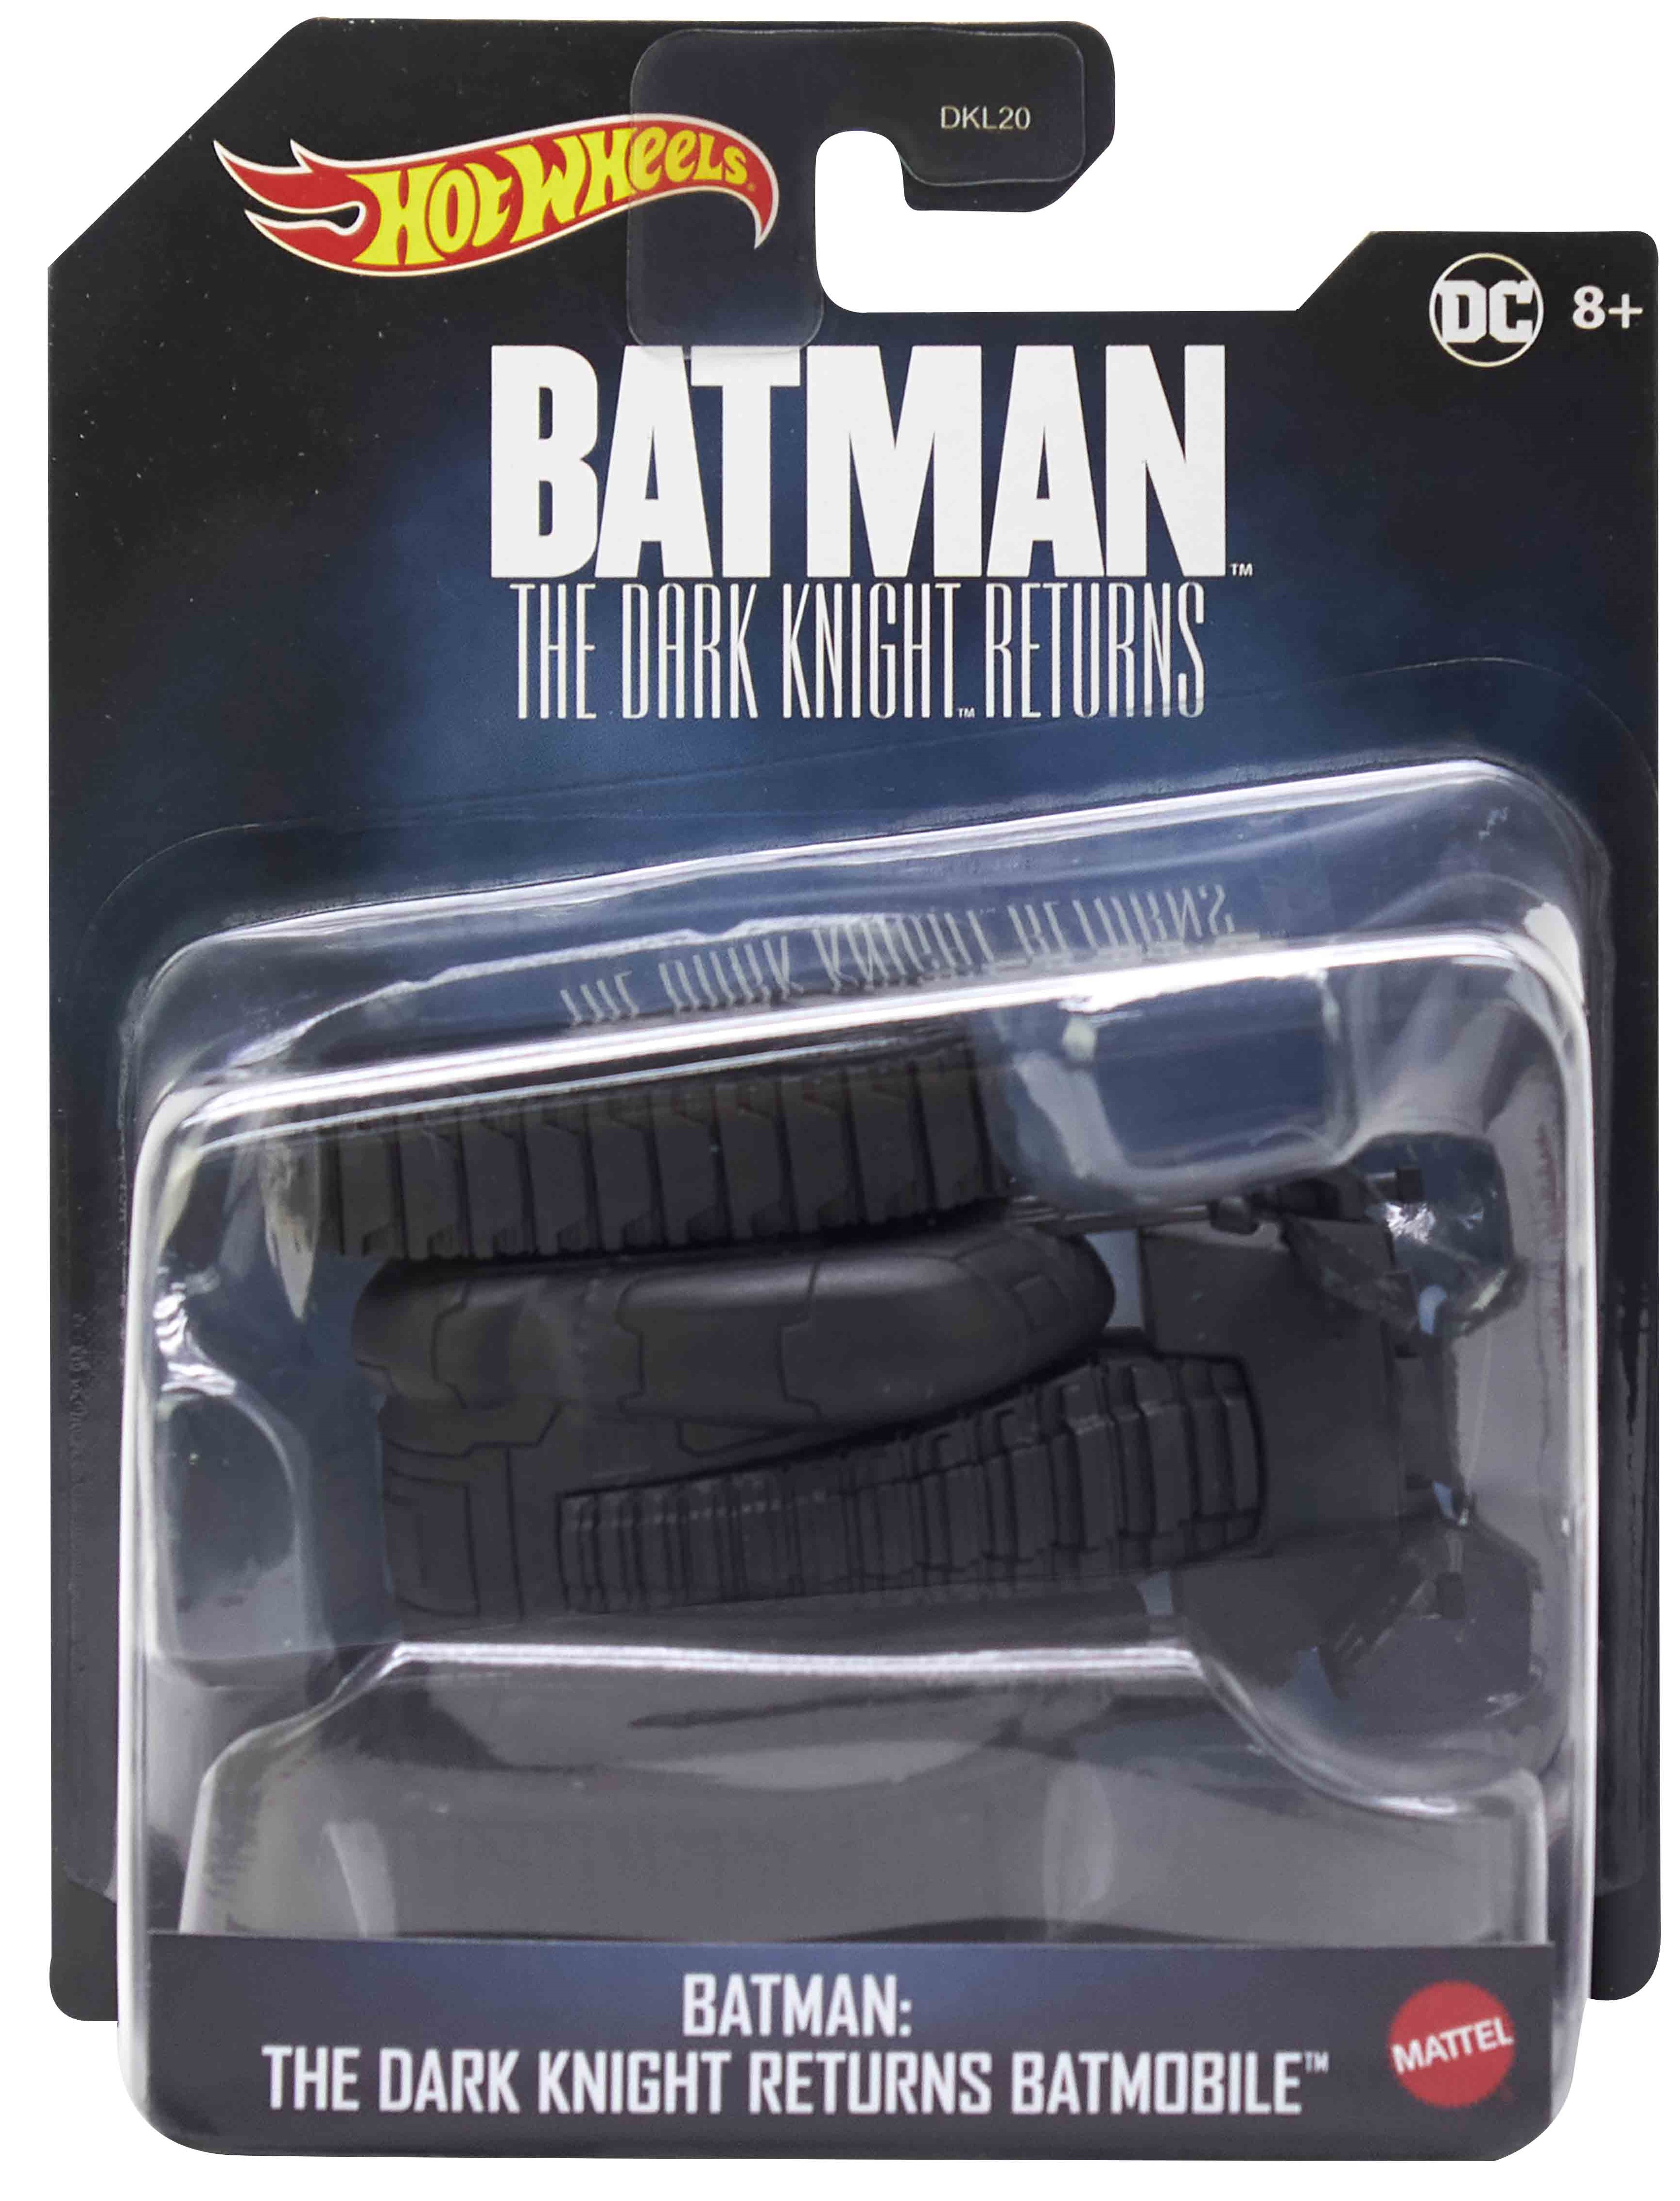 Количка Hot Wheels Batman - The Dark Knight Returns Batmobile (DKL20)